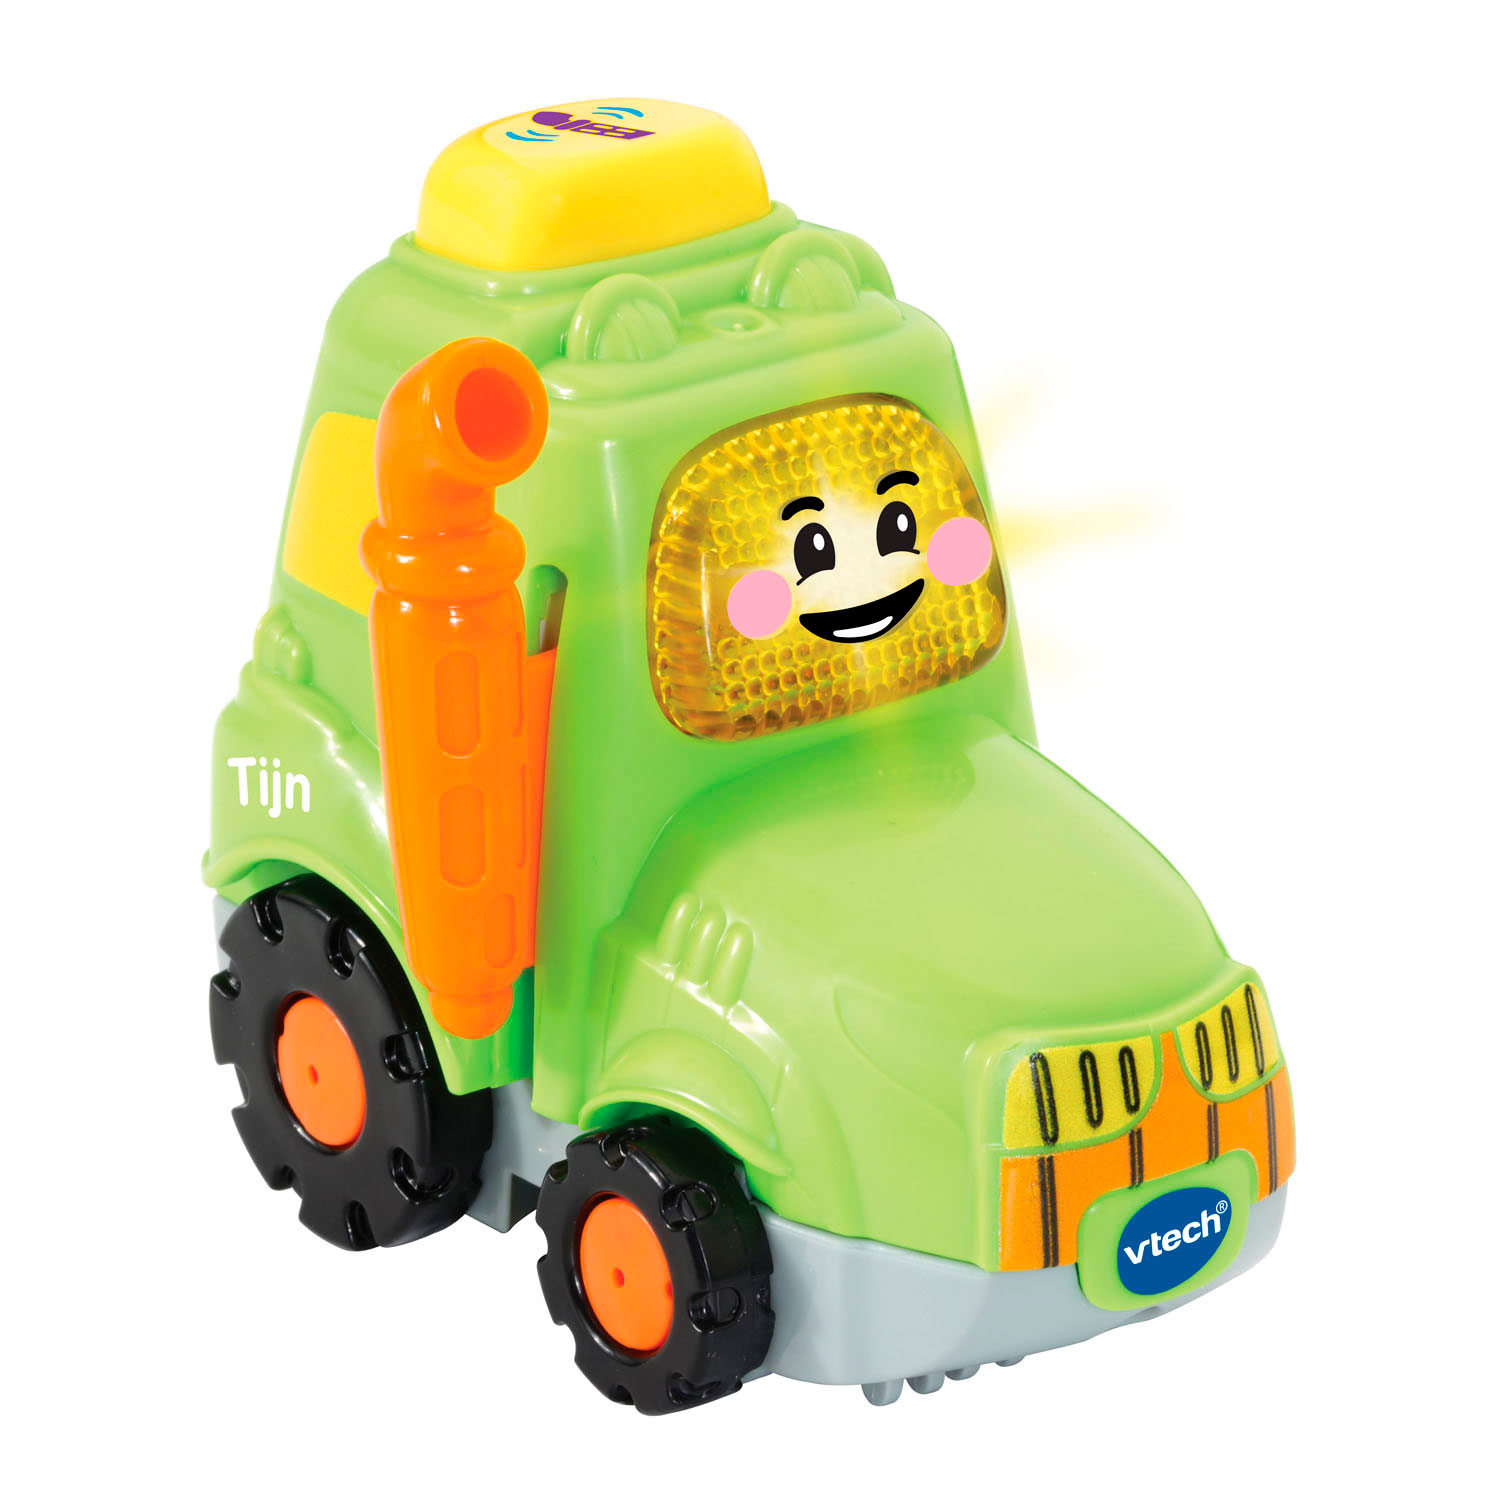 Bezit acre Onmogelijk VTech Toet Toet Cars - Tijn Tractor | Thimble Toys